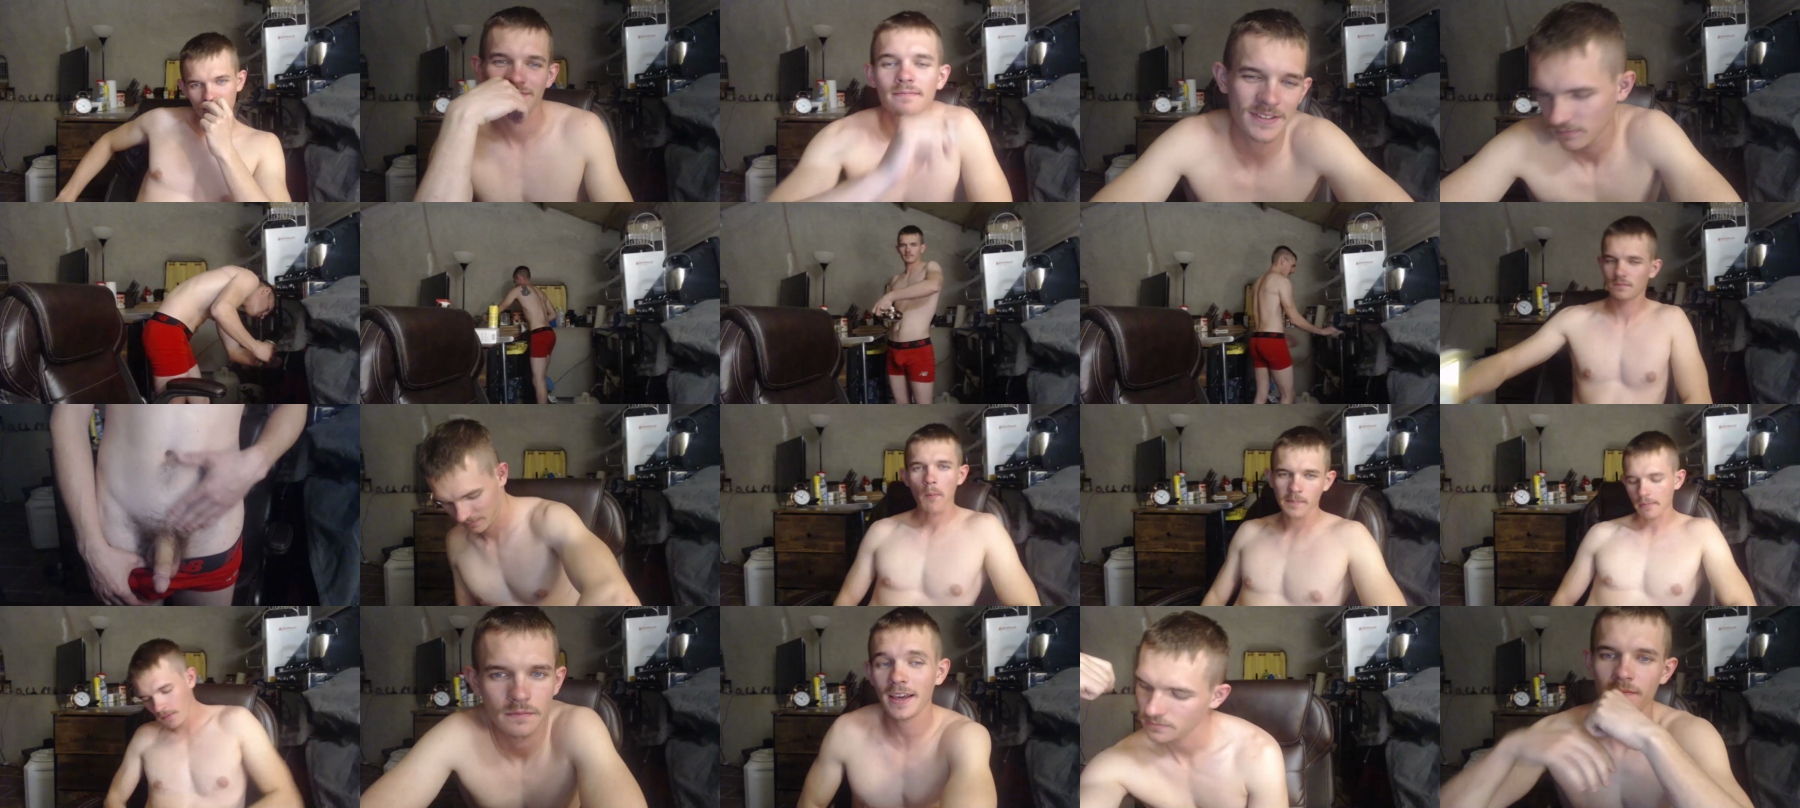 Ethansxxx  04-11-2021 Male Nude